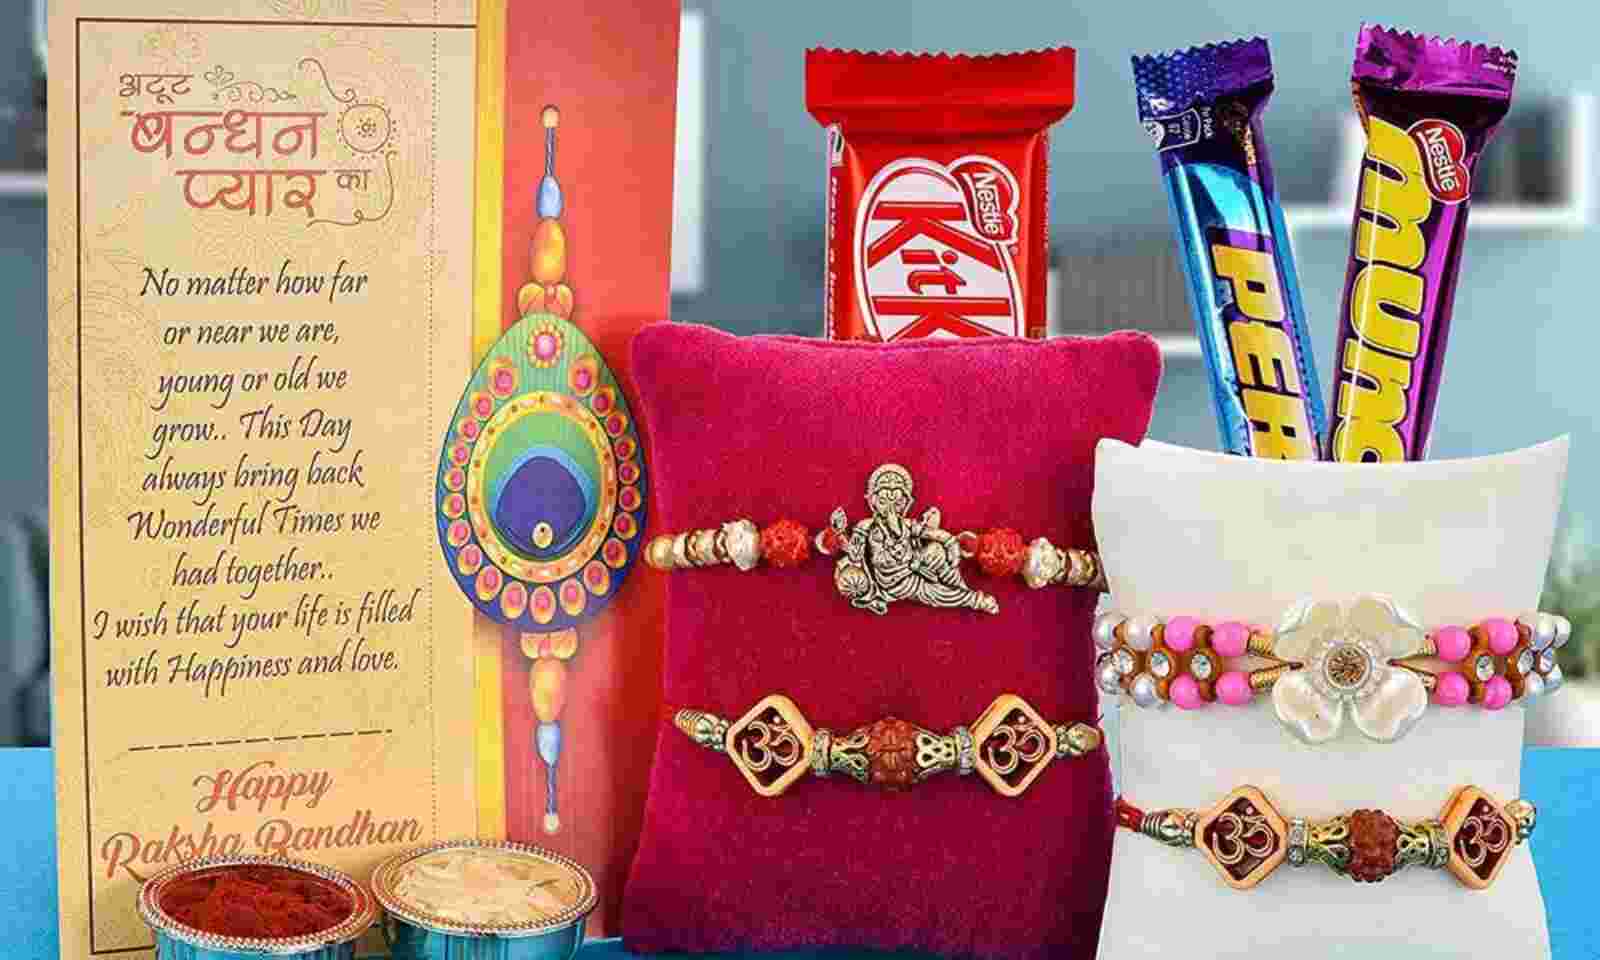 Unusual Rakhi Gifts Ideas for Brothers for a Joyful Raksha Bandhan